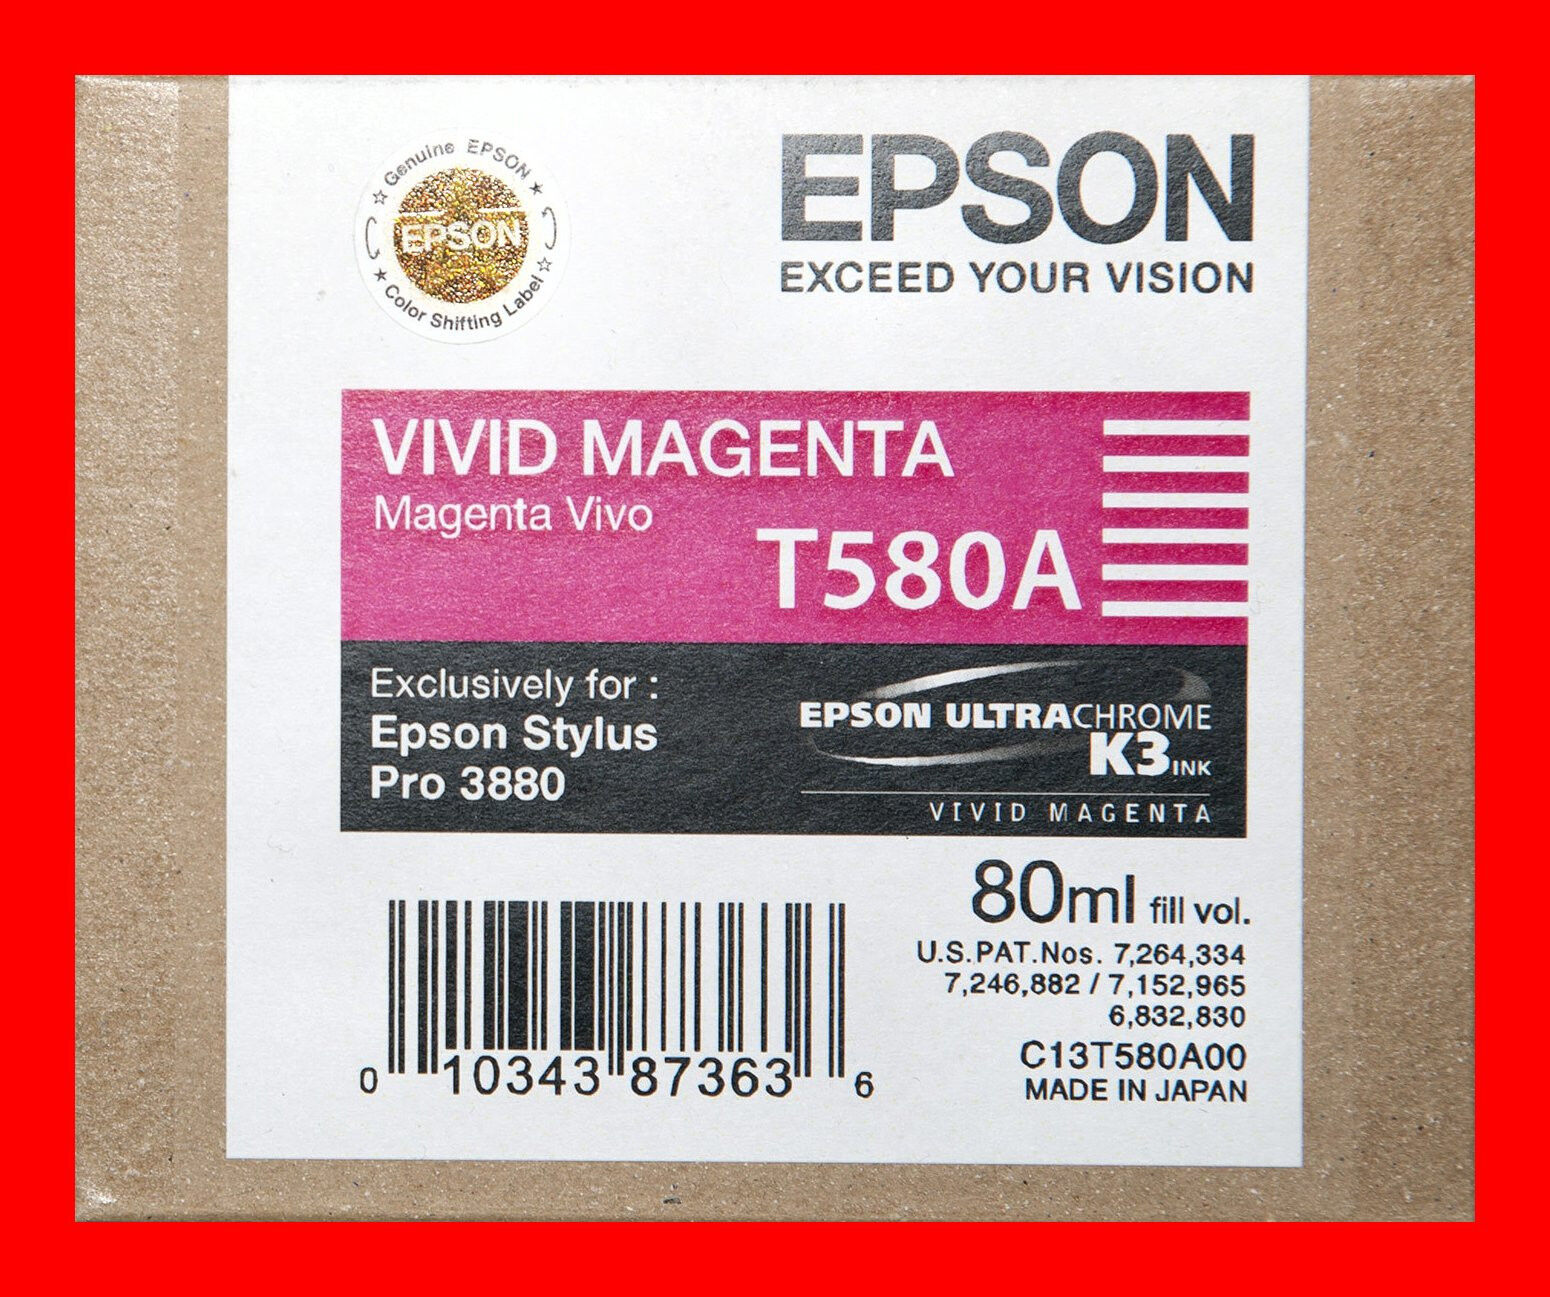 Label Damage 03-2016 NIB Genuine Epson T580A vivid magenta printer ink Pro 3880